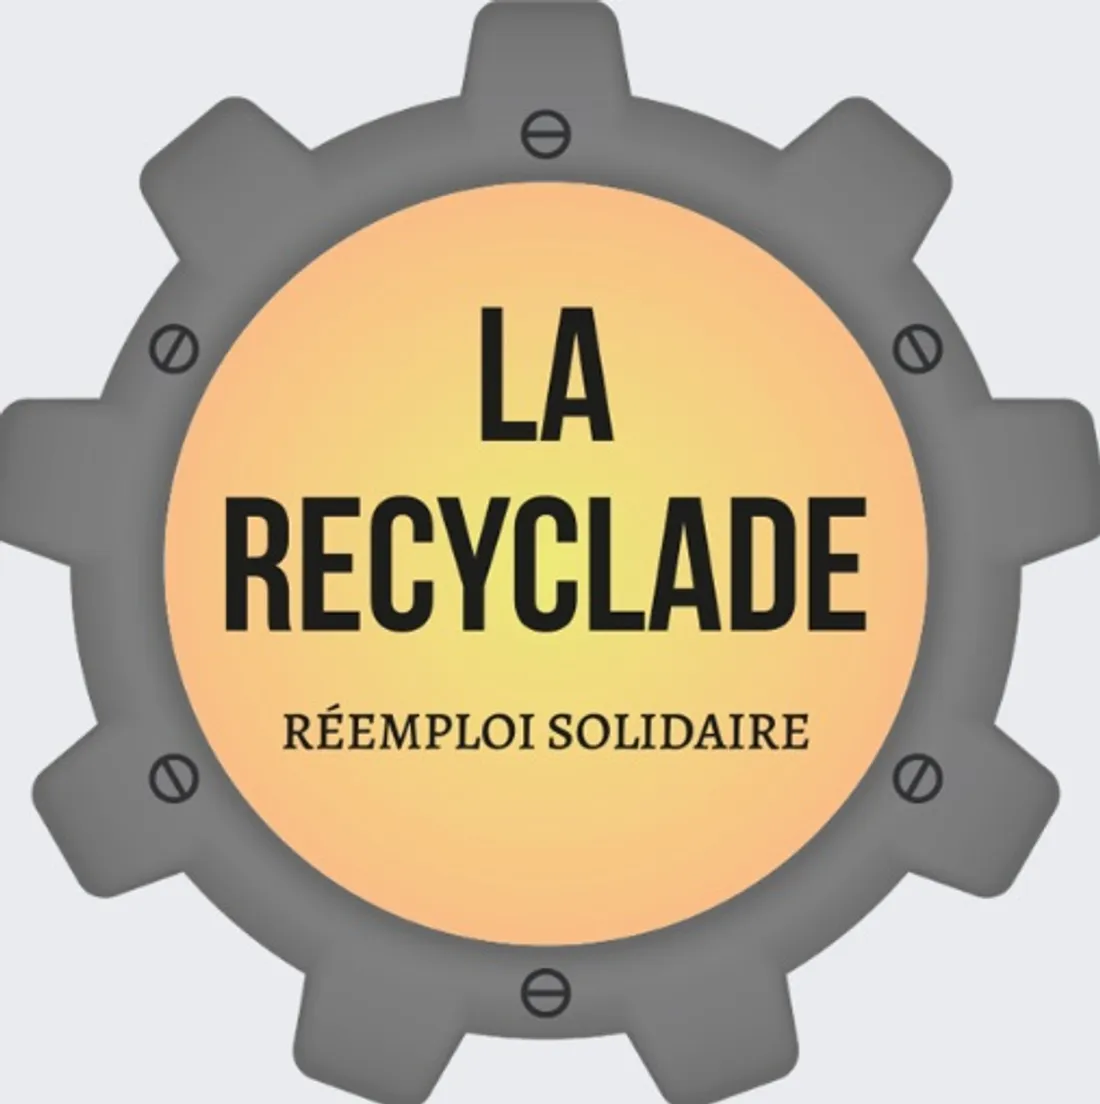 La Recyclade